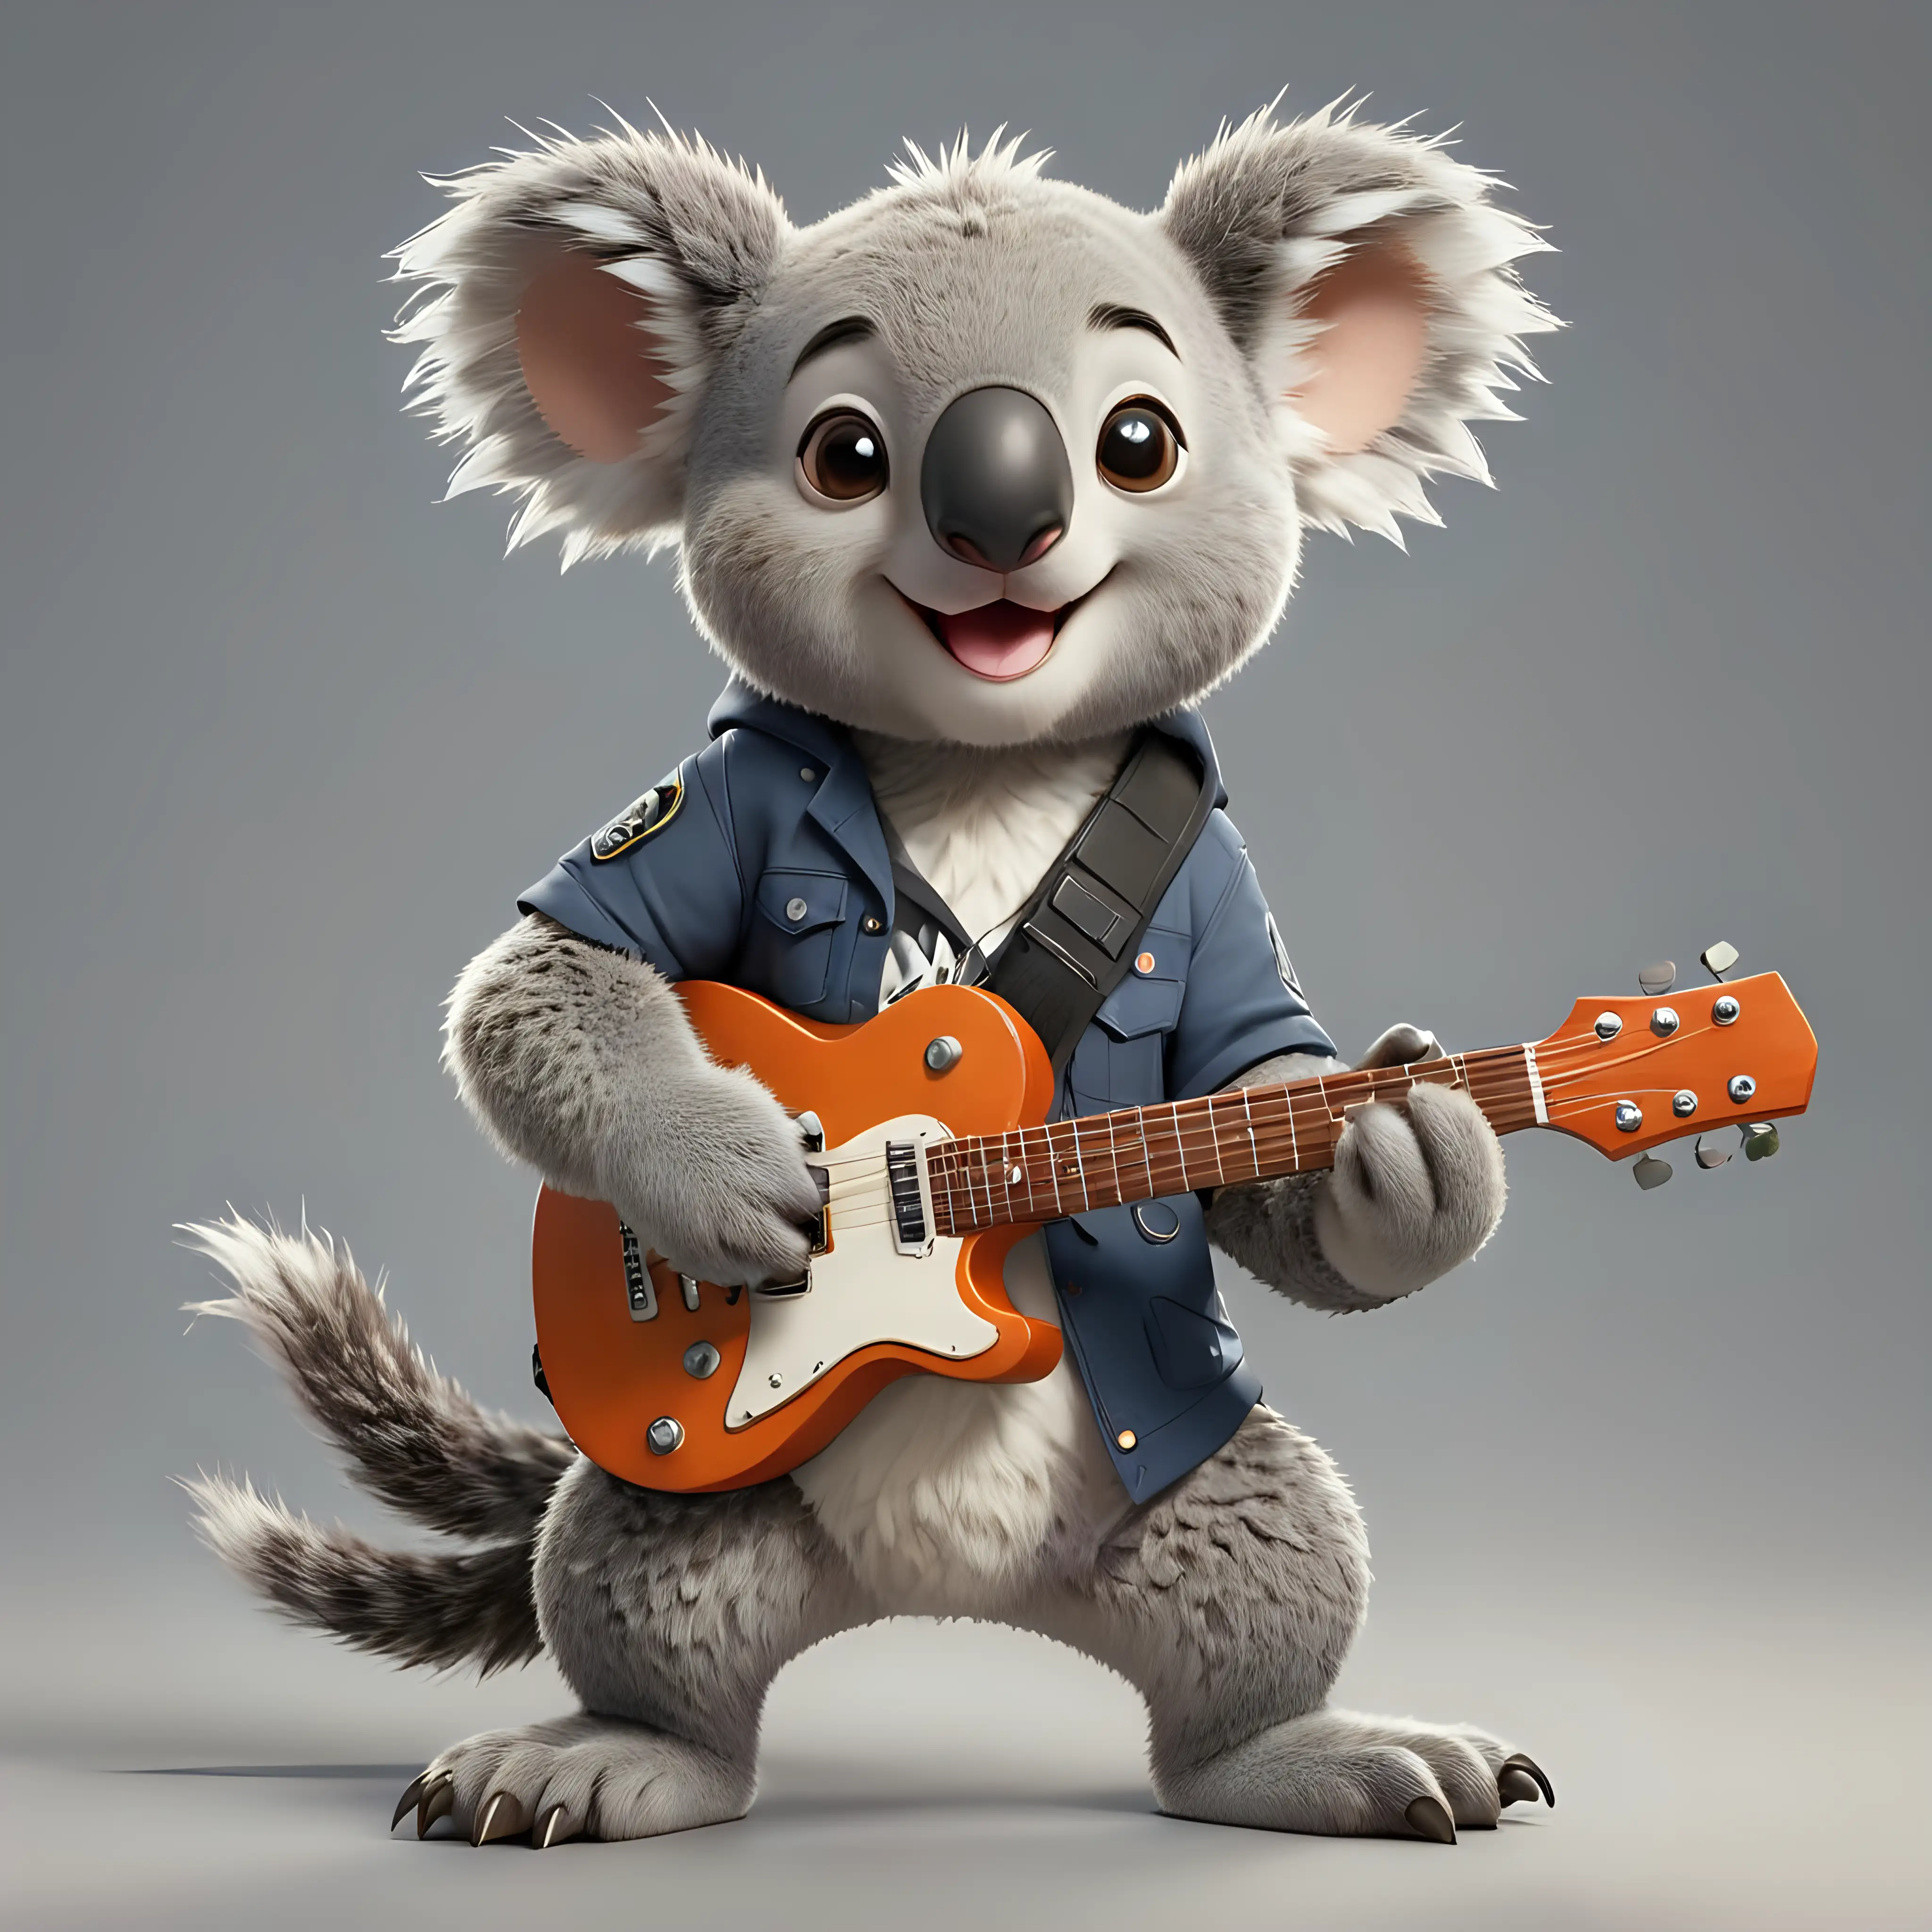 Cheerful Cartoon Koala Musician Playing Electric Guitar